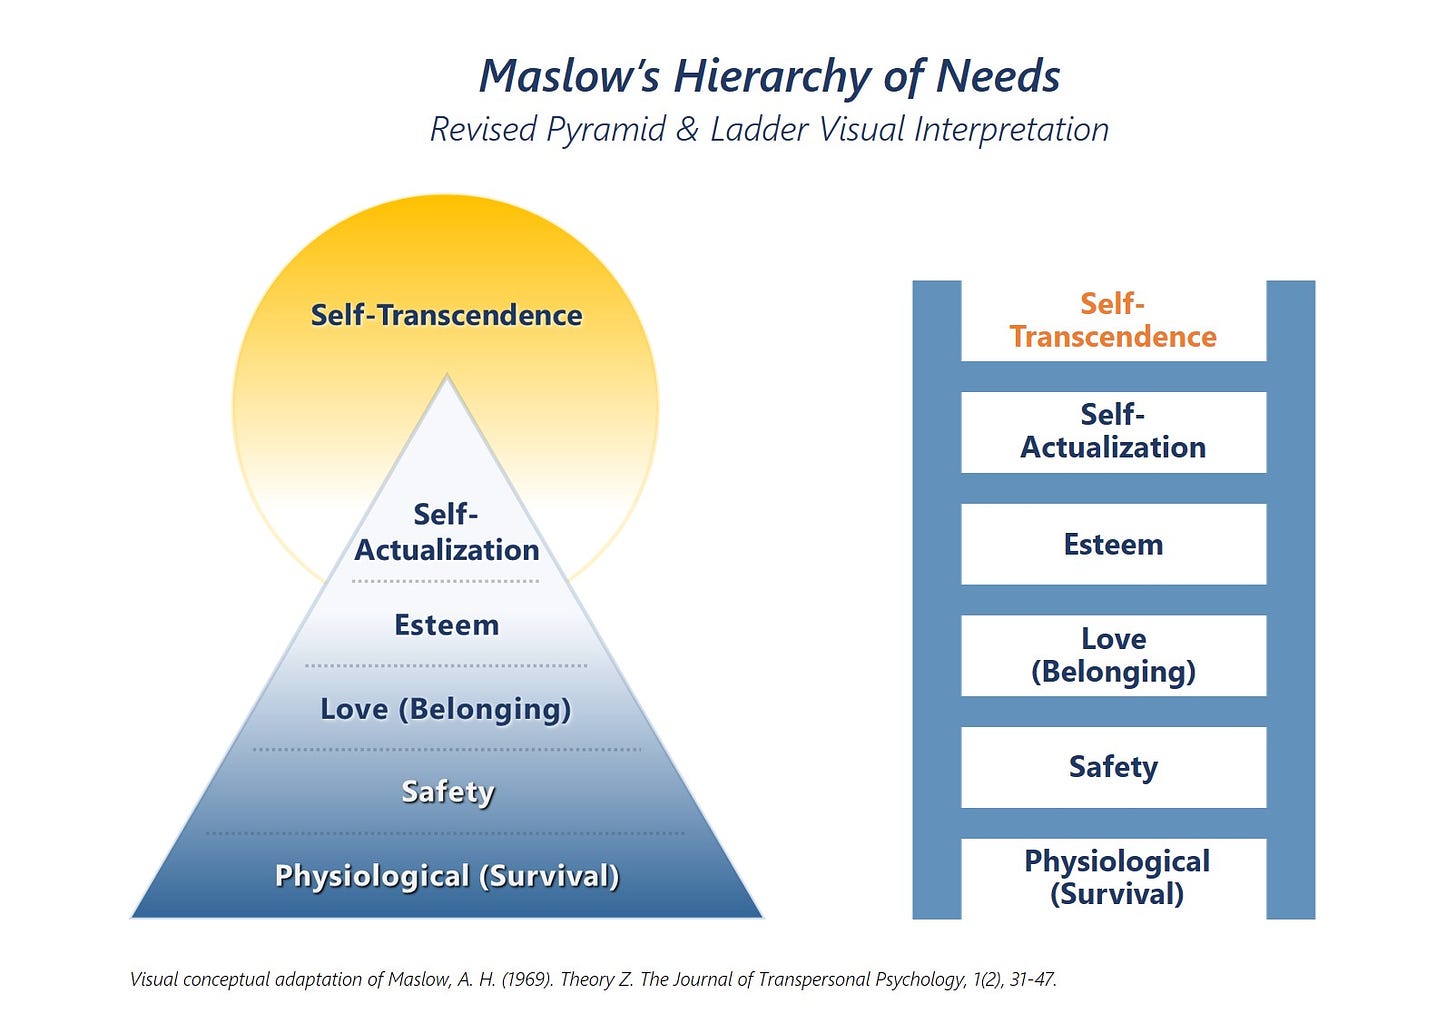 Maslow's Hierarchy of Needs - Revised Pyramid and Ladder Visual Interpretation